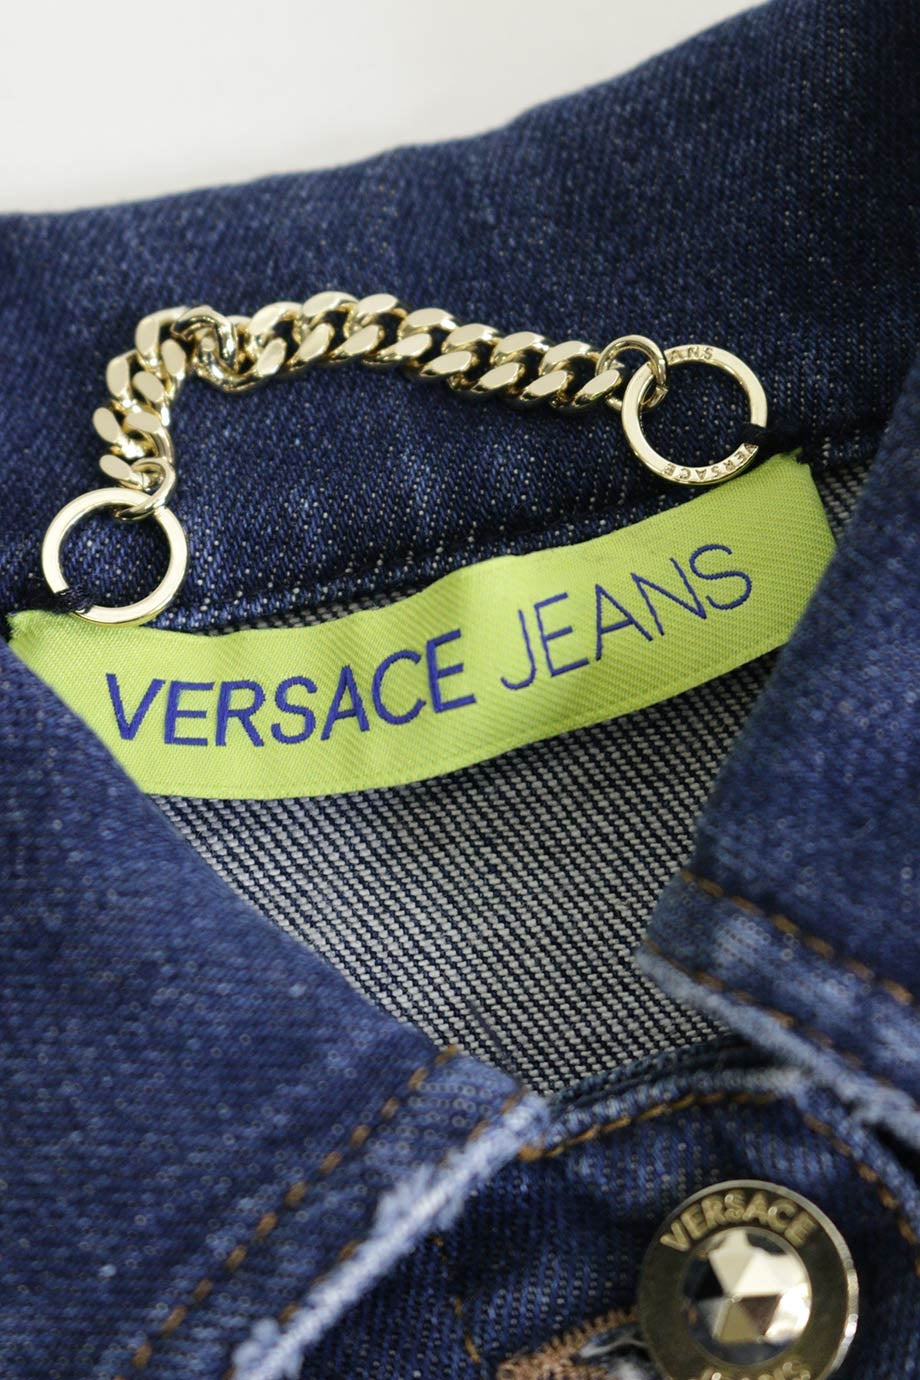 u2807_ww21502_versace_jeans_4.jpg